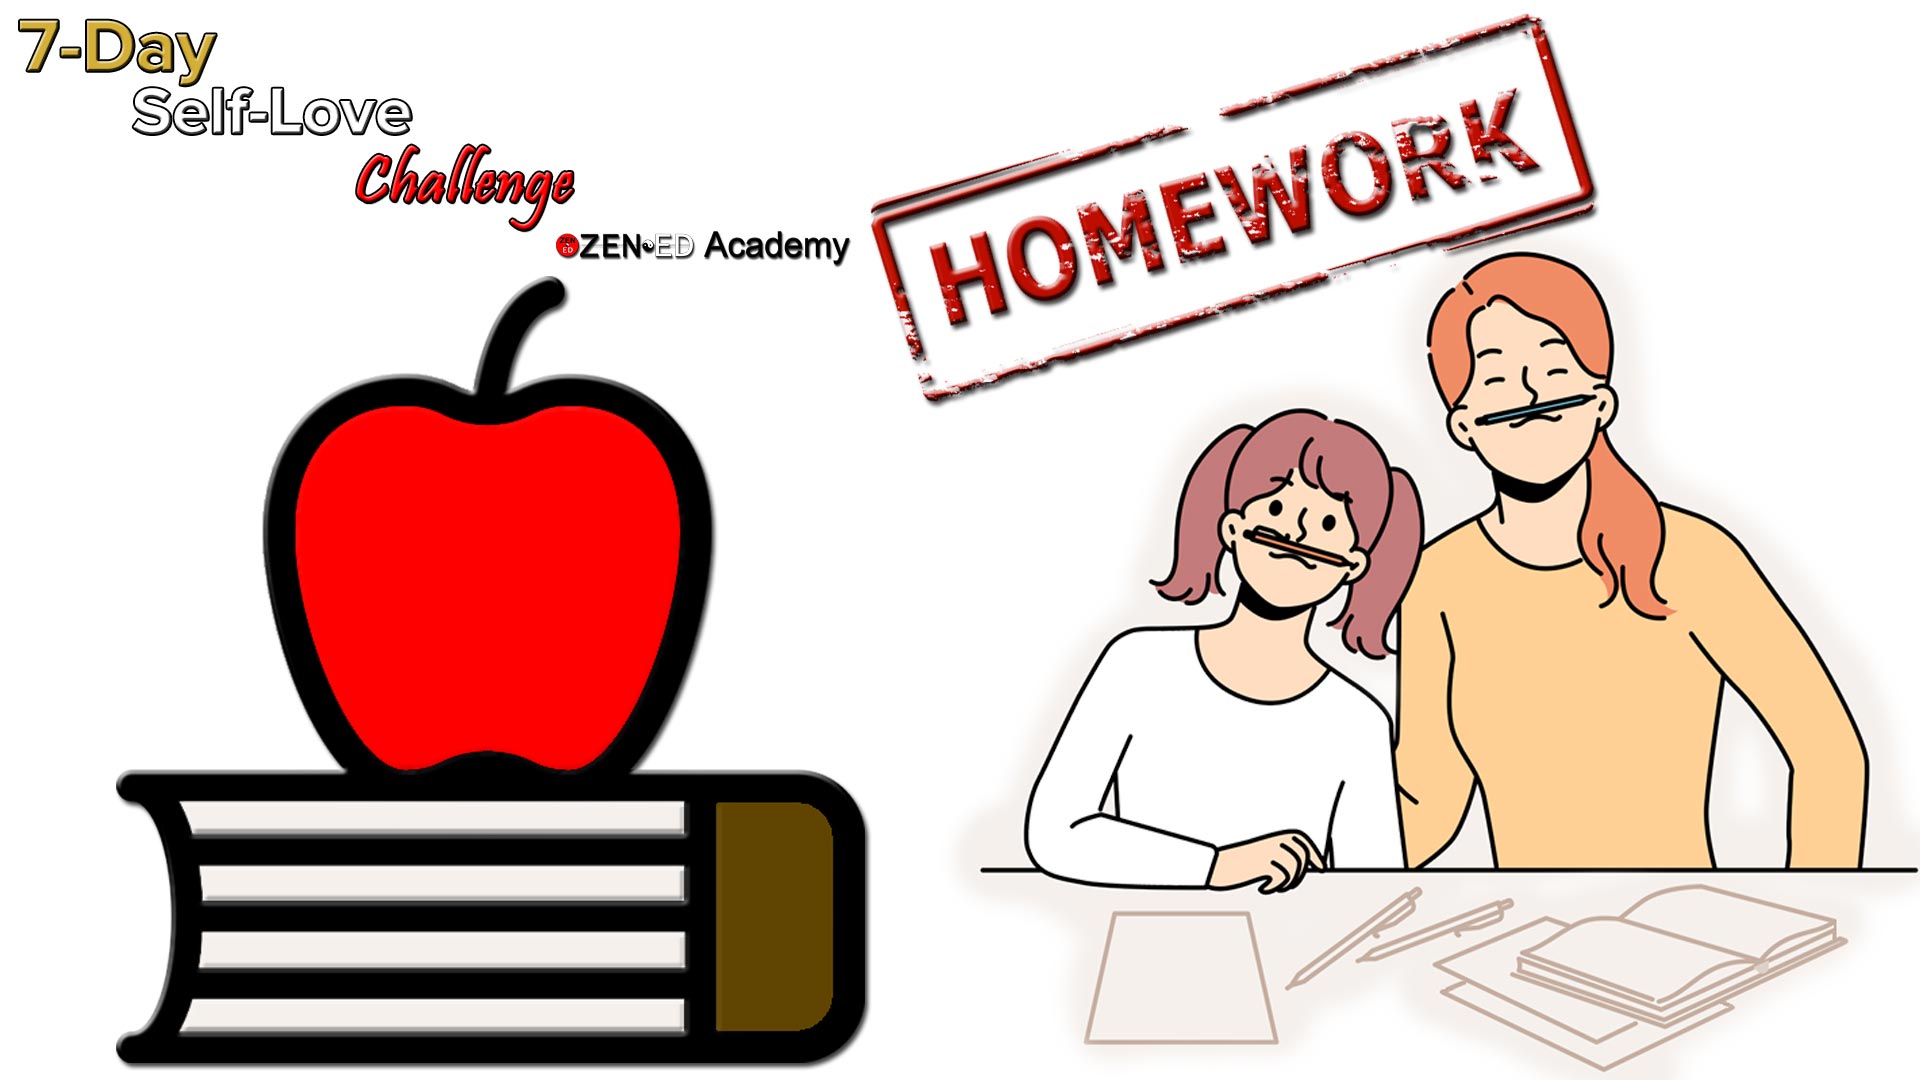 Homework (Thumbnail) Zen Ed Academy's Free 7-Day Self-Love Challenge